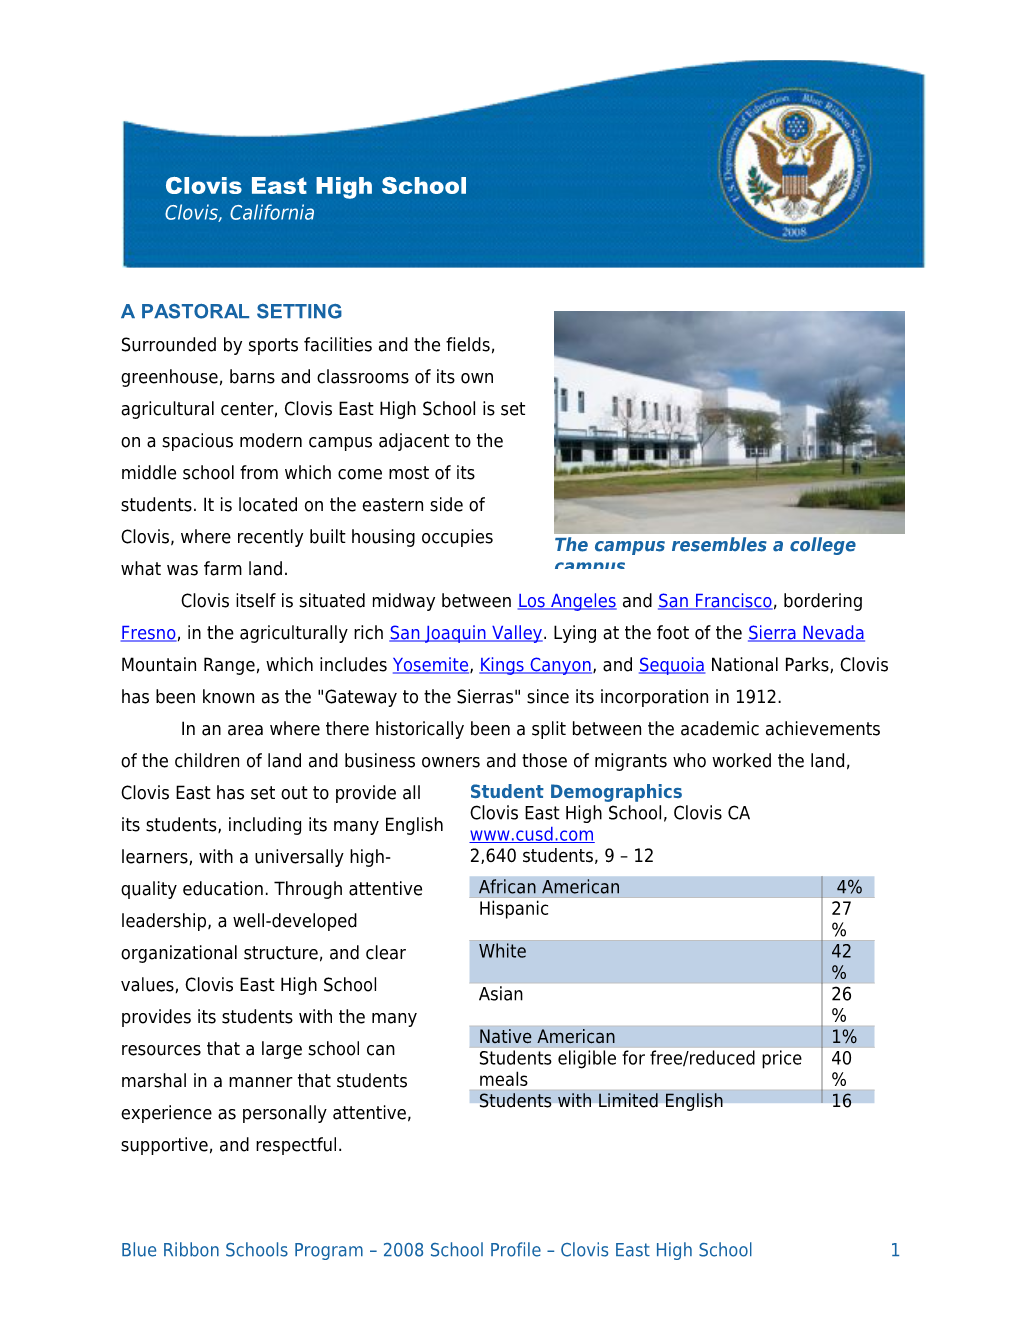 Profile of Clovis East High School, Clovis CA: a 2008 2008 Blue Ribbon Schools July 2009